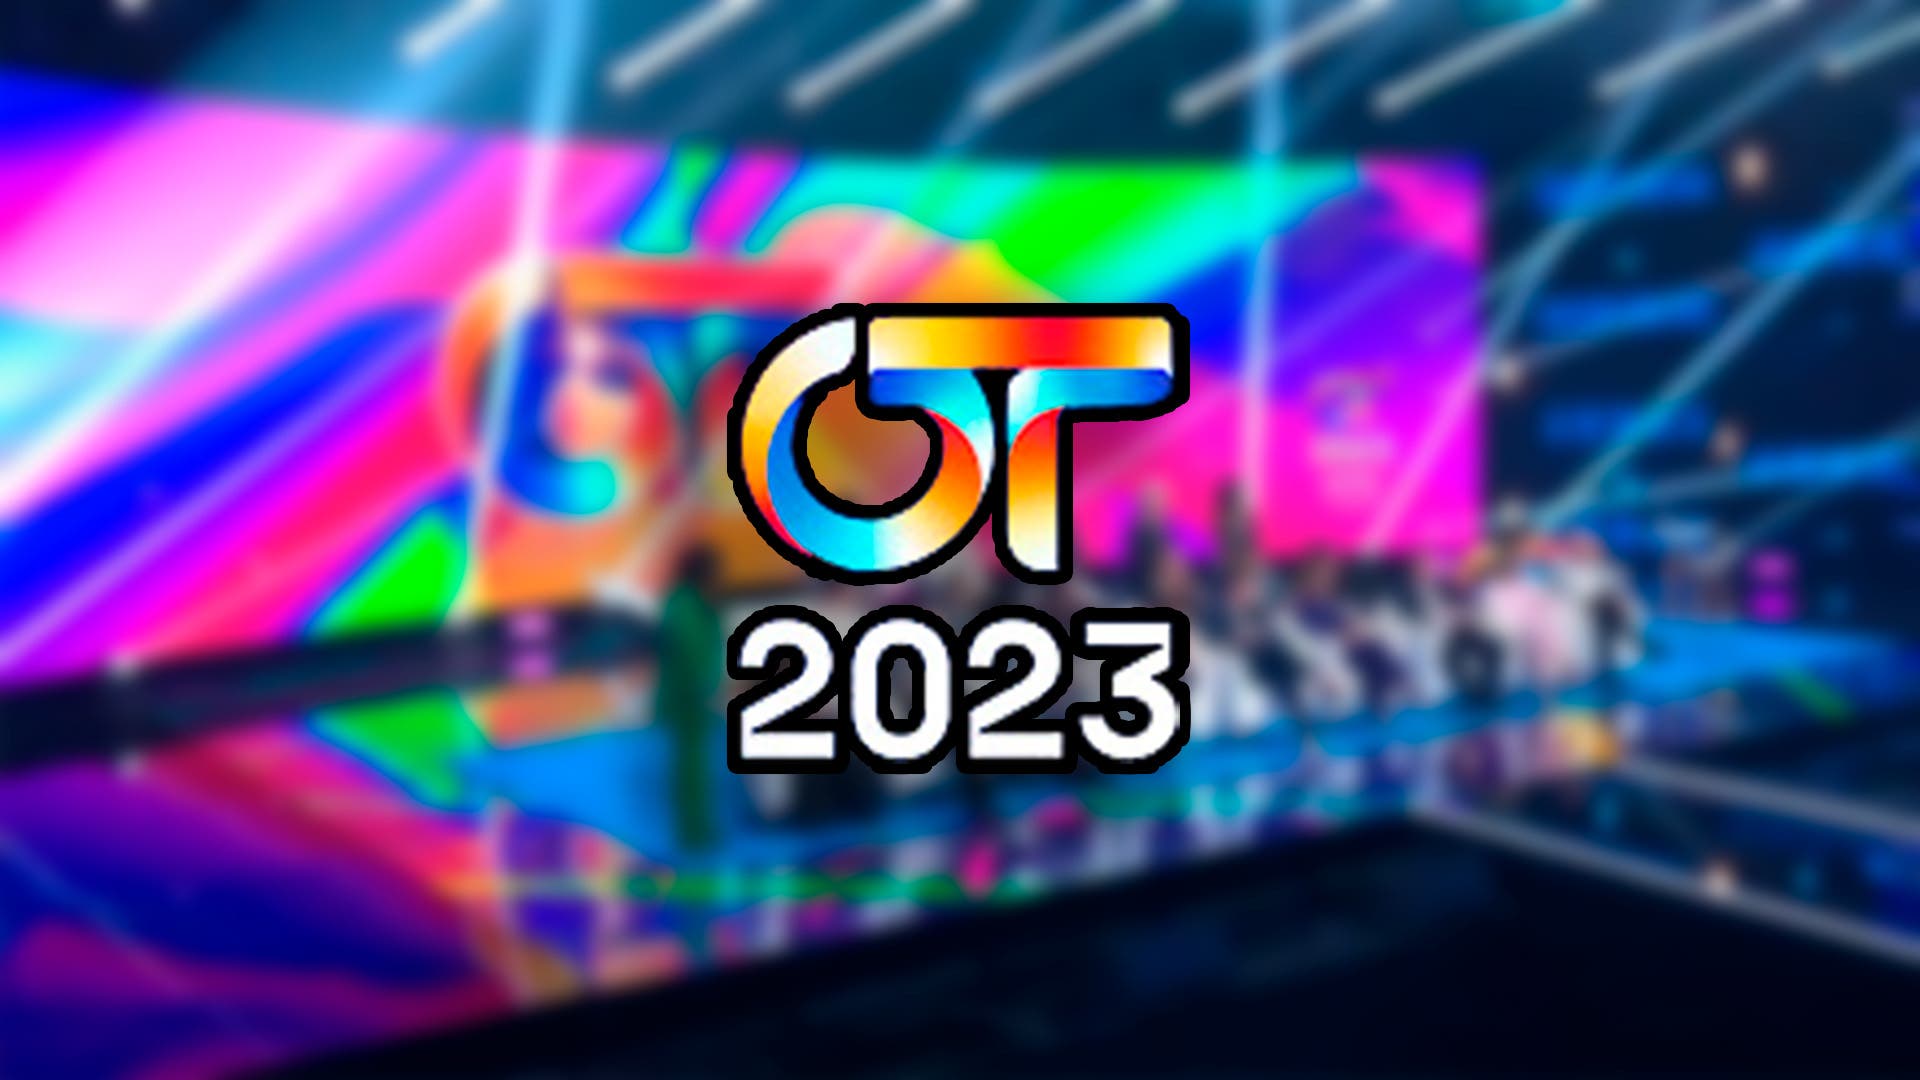 OT 2023' aterriza en València: cuatro concursantes firmarán discos